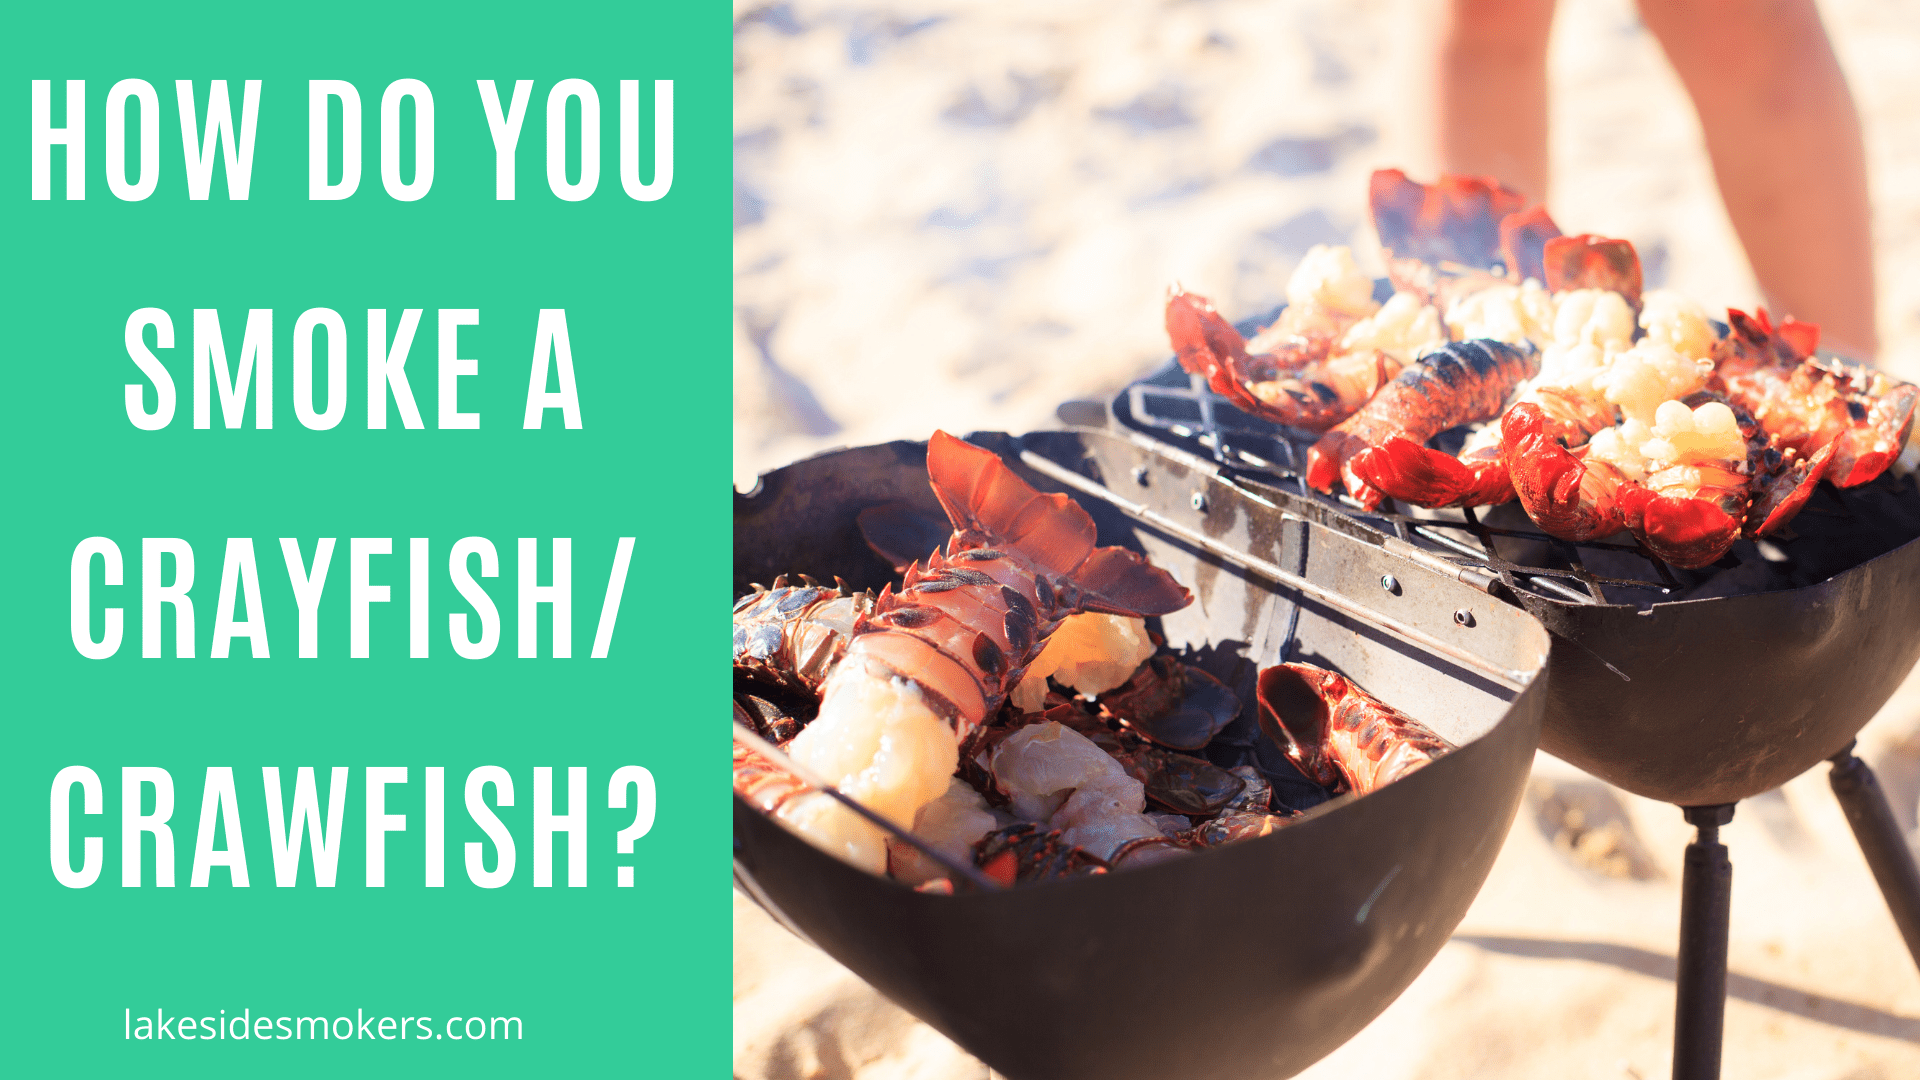 How do you smoke a crayfish:crawfish? Full recipe + gear explained